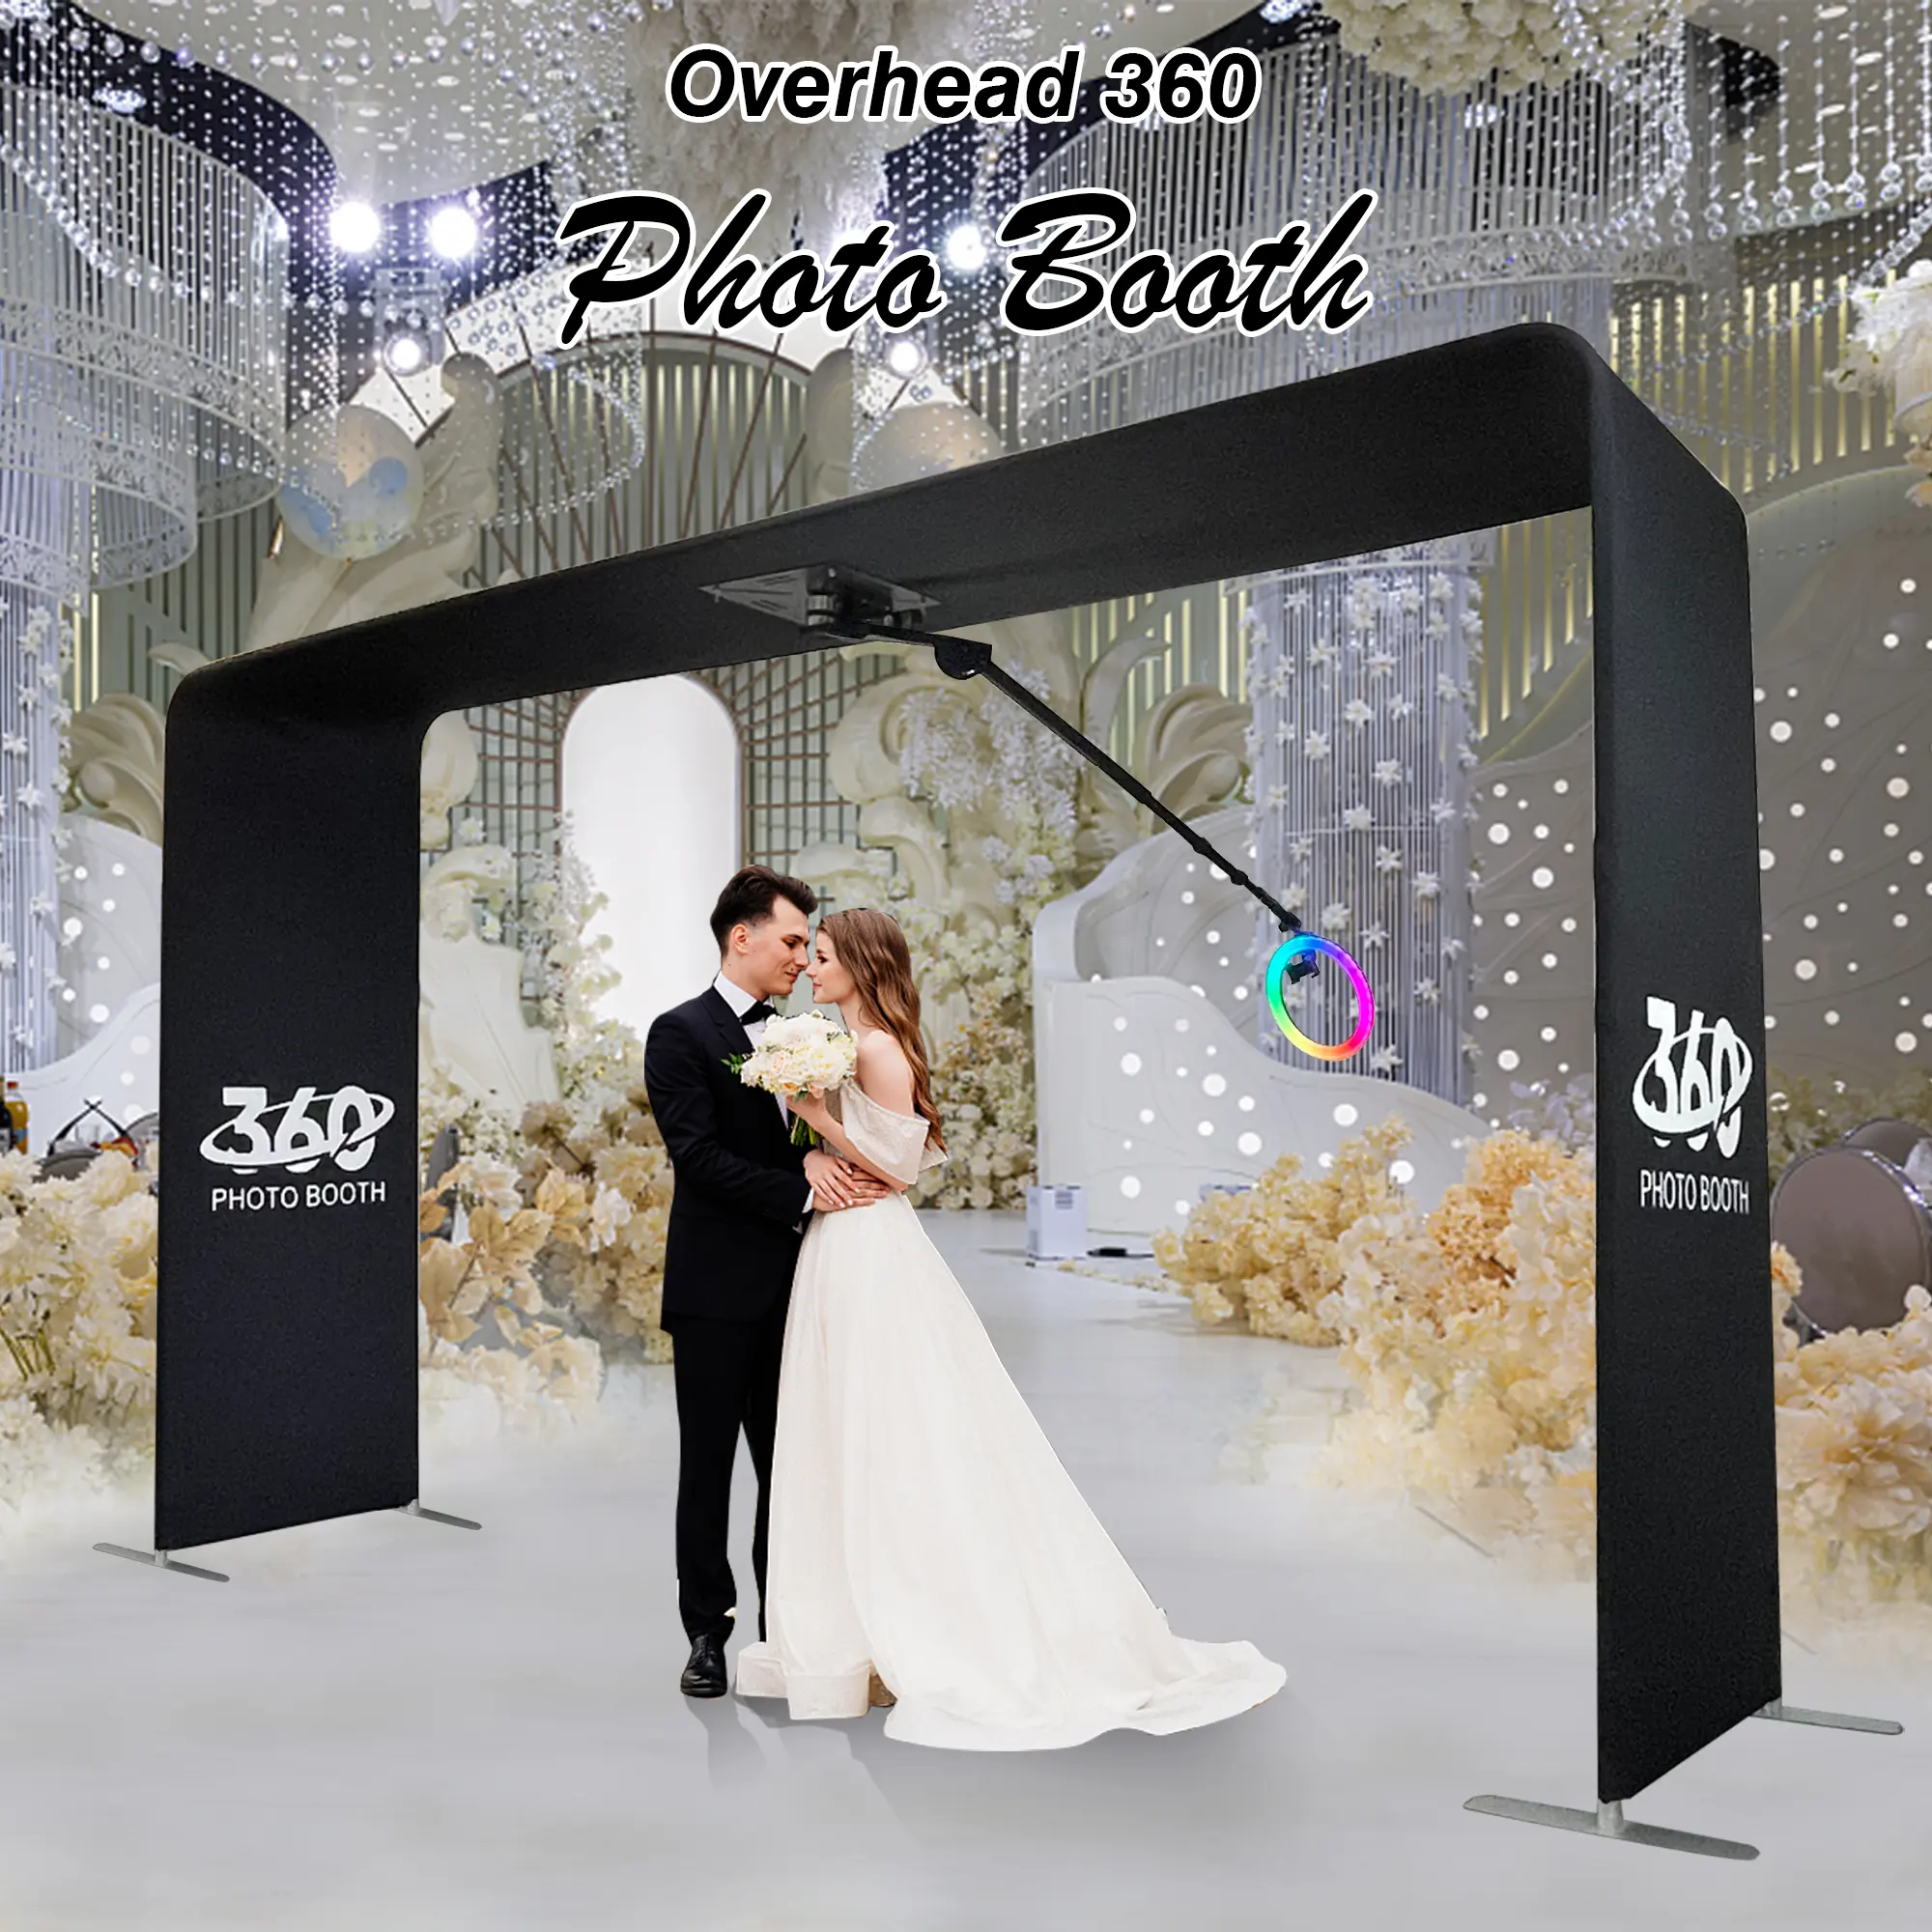 All'ingrosso per feste spinner top 360 in testa photobooth sopra la testa 360 selfie photo booth sky 360 photo booth